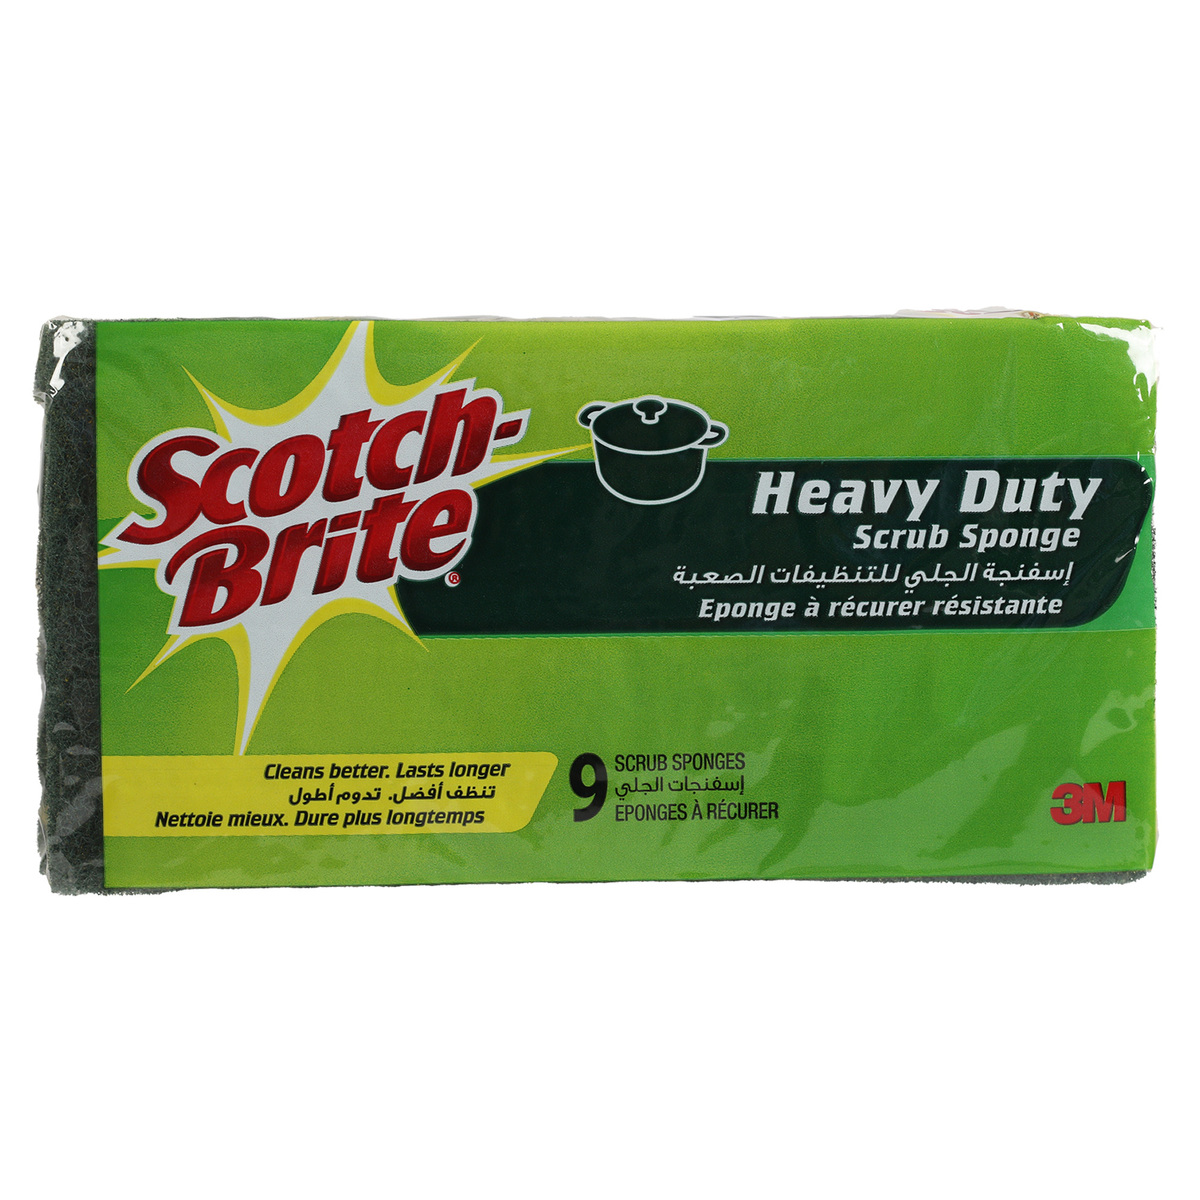 Scotch Brite Heavy Duty Scrub Sponge 9 pcs